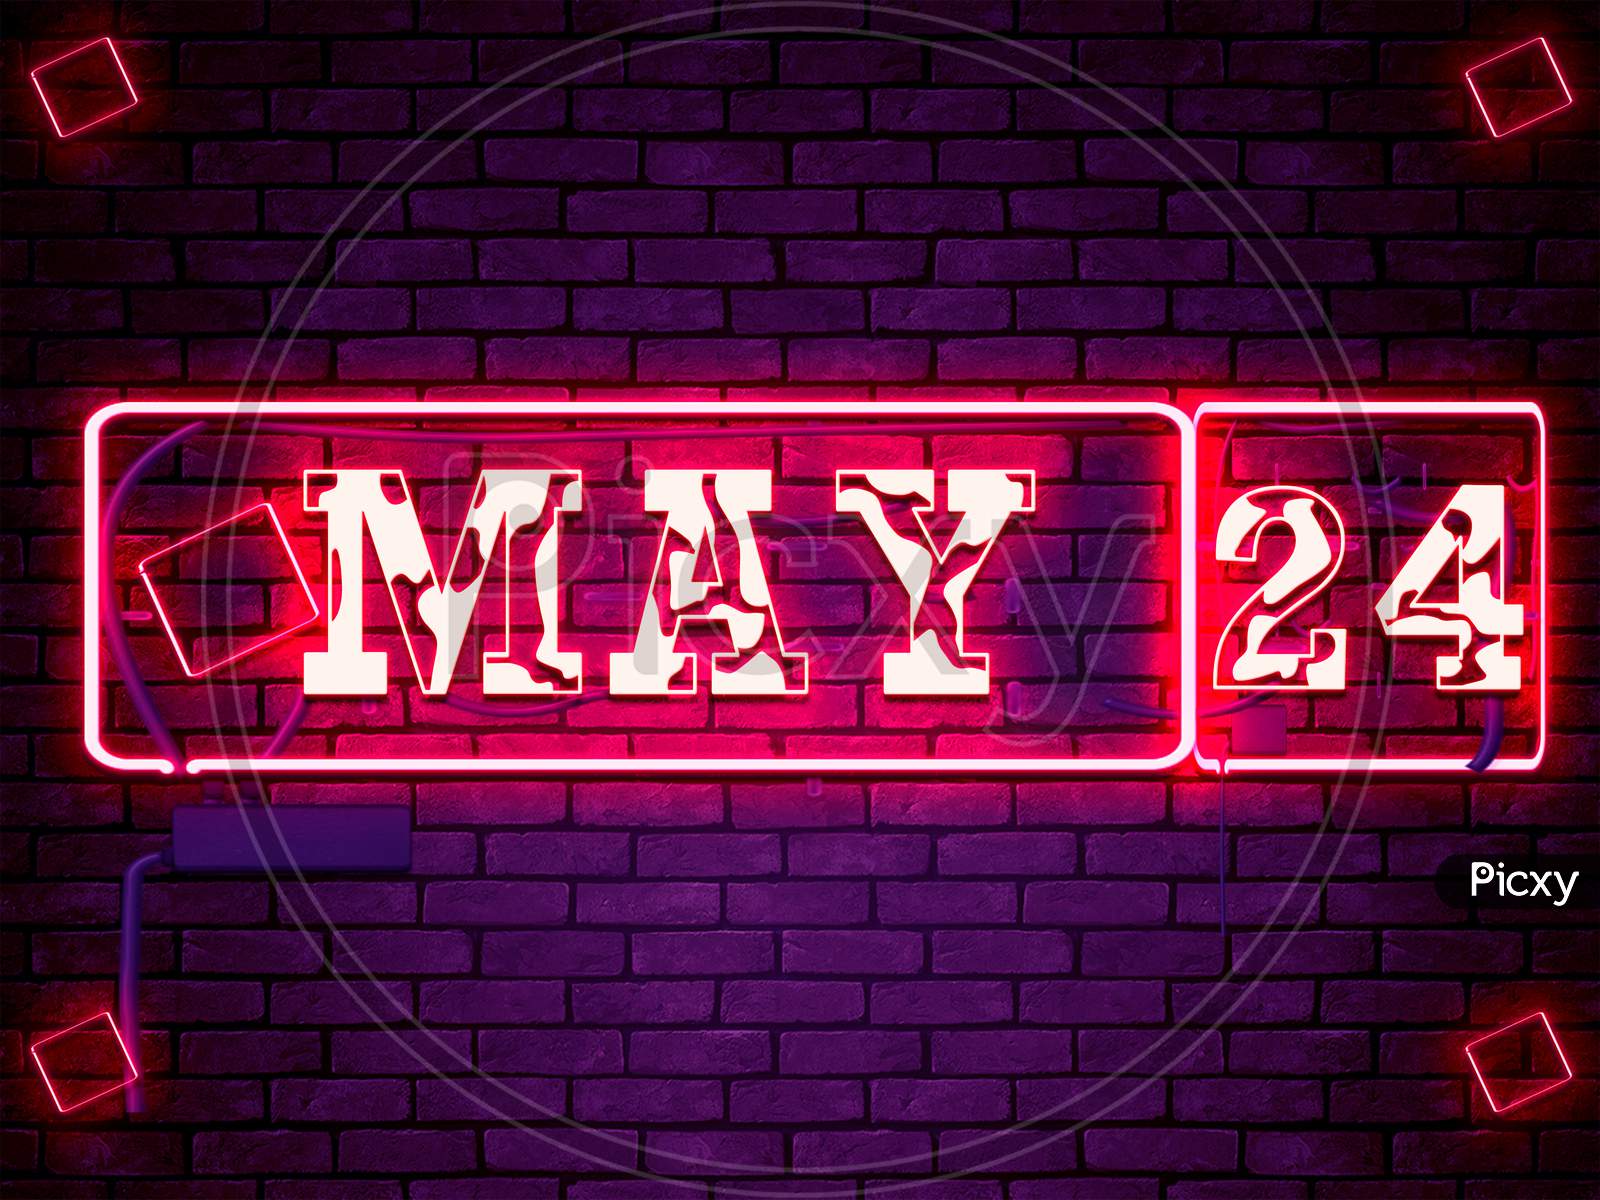 24 May, Monthly Calendar On Bricks Background